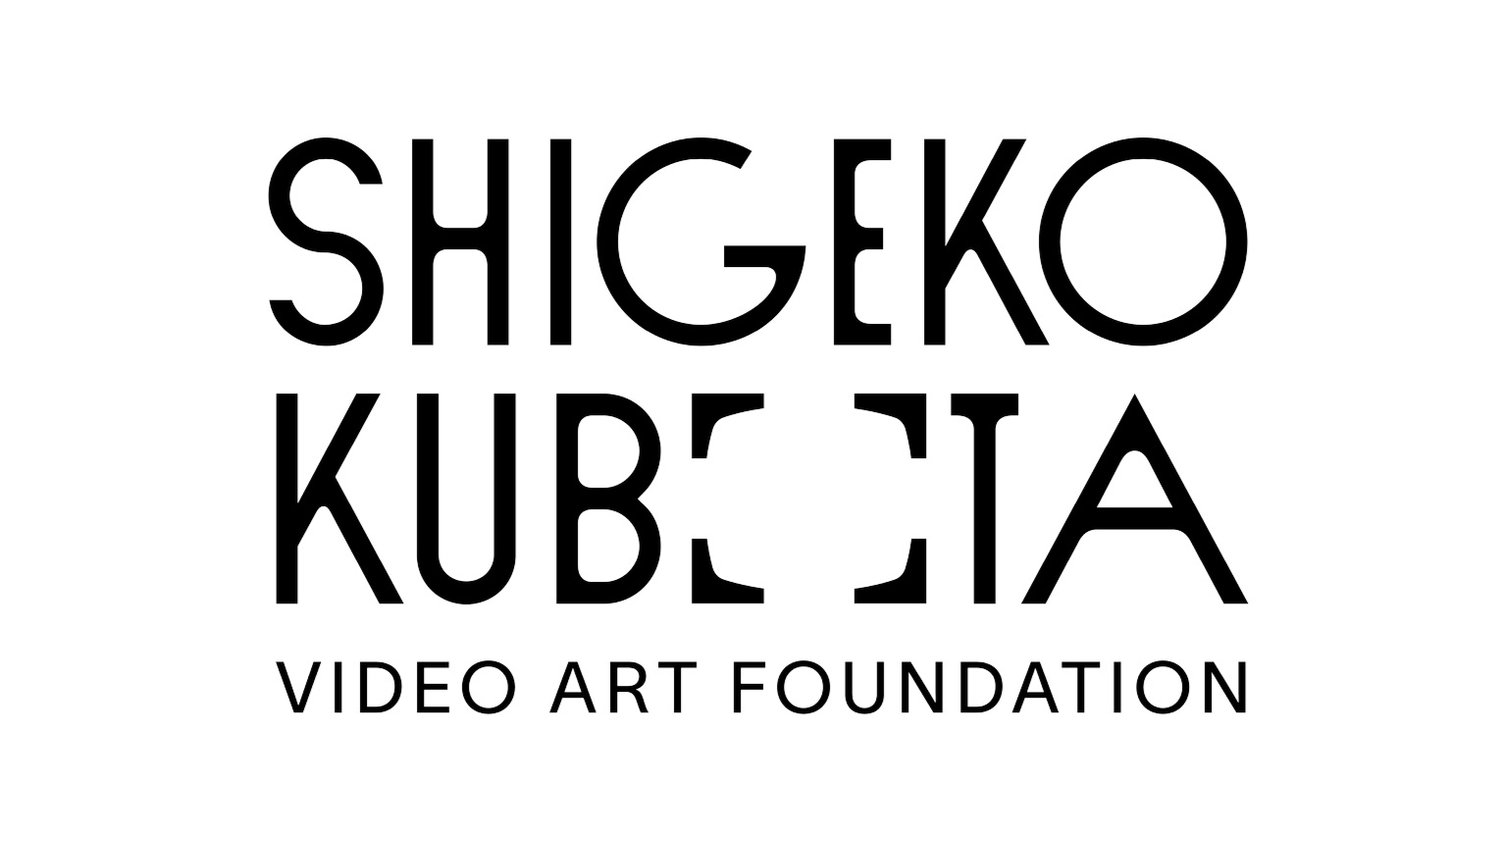 Shigeko Kubota Video Art Foundation